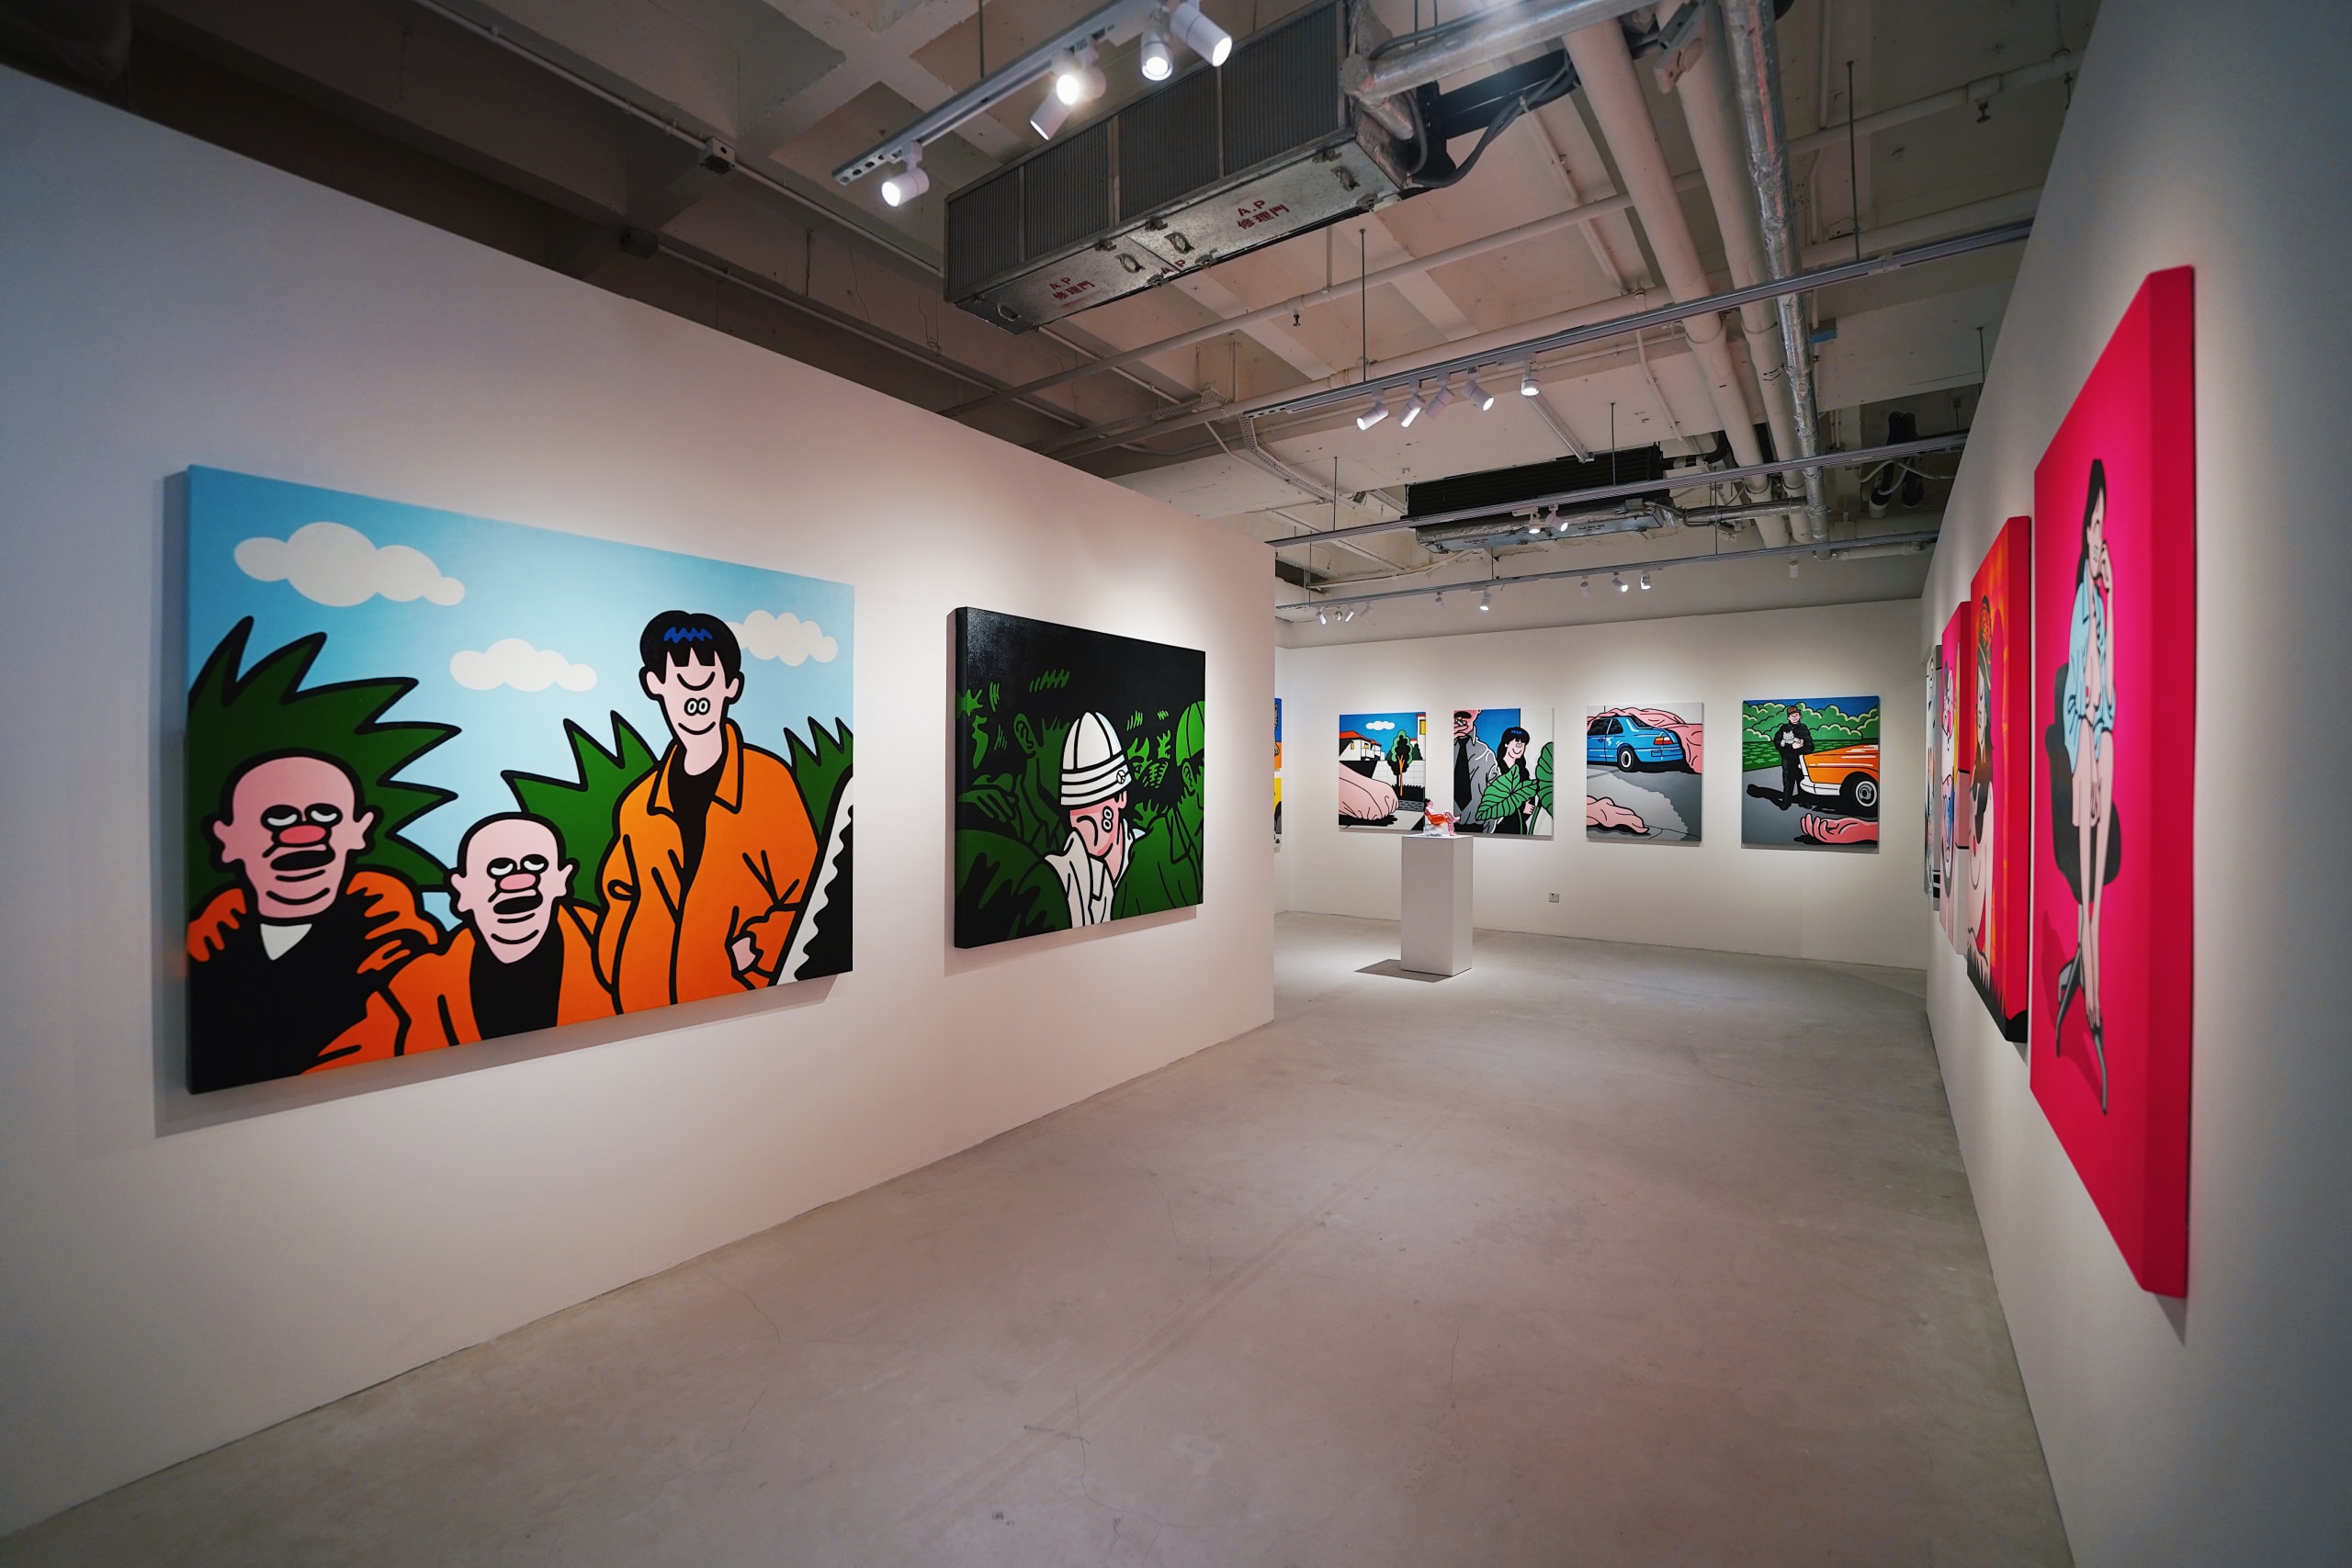 AllRightsReserved 主辦日本藝術家 face oka 首次海外個展《STORYBOARD》正式登陸香港